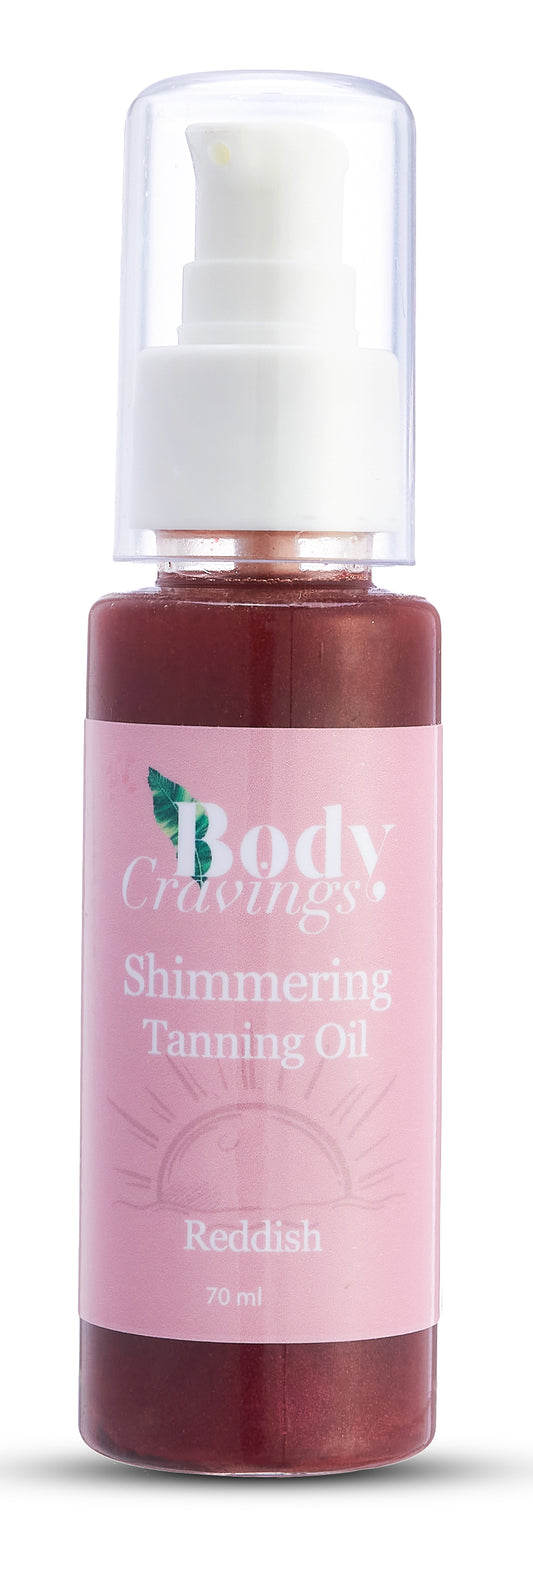 Red Shimmering Tanning Oil